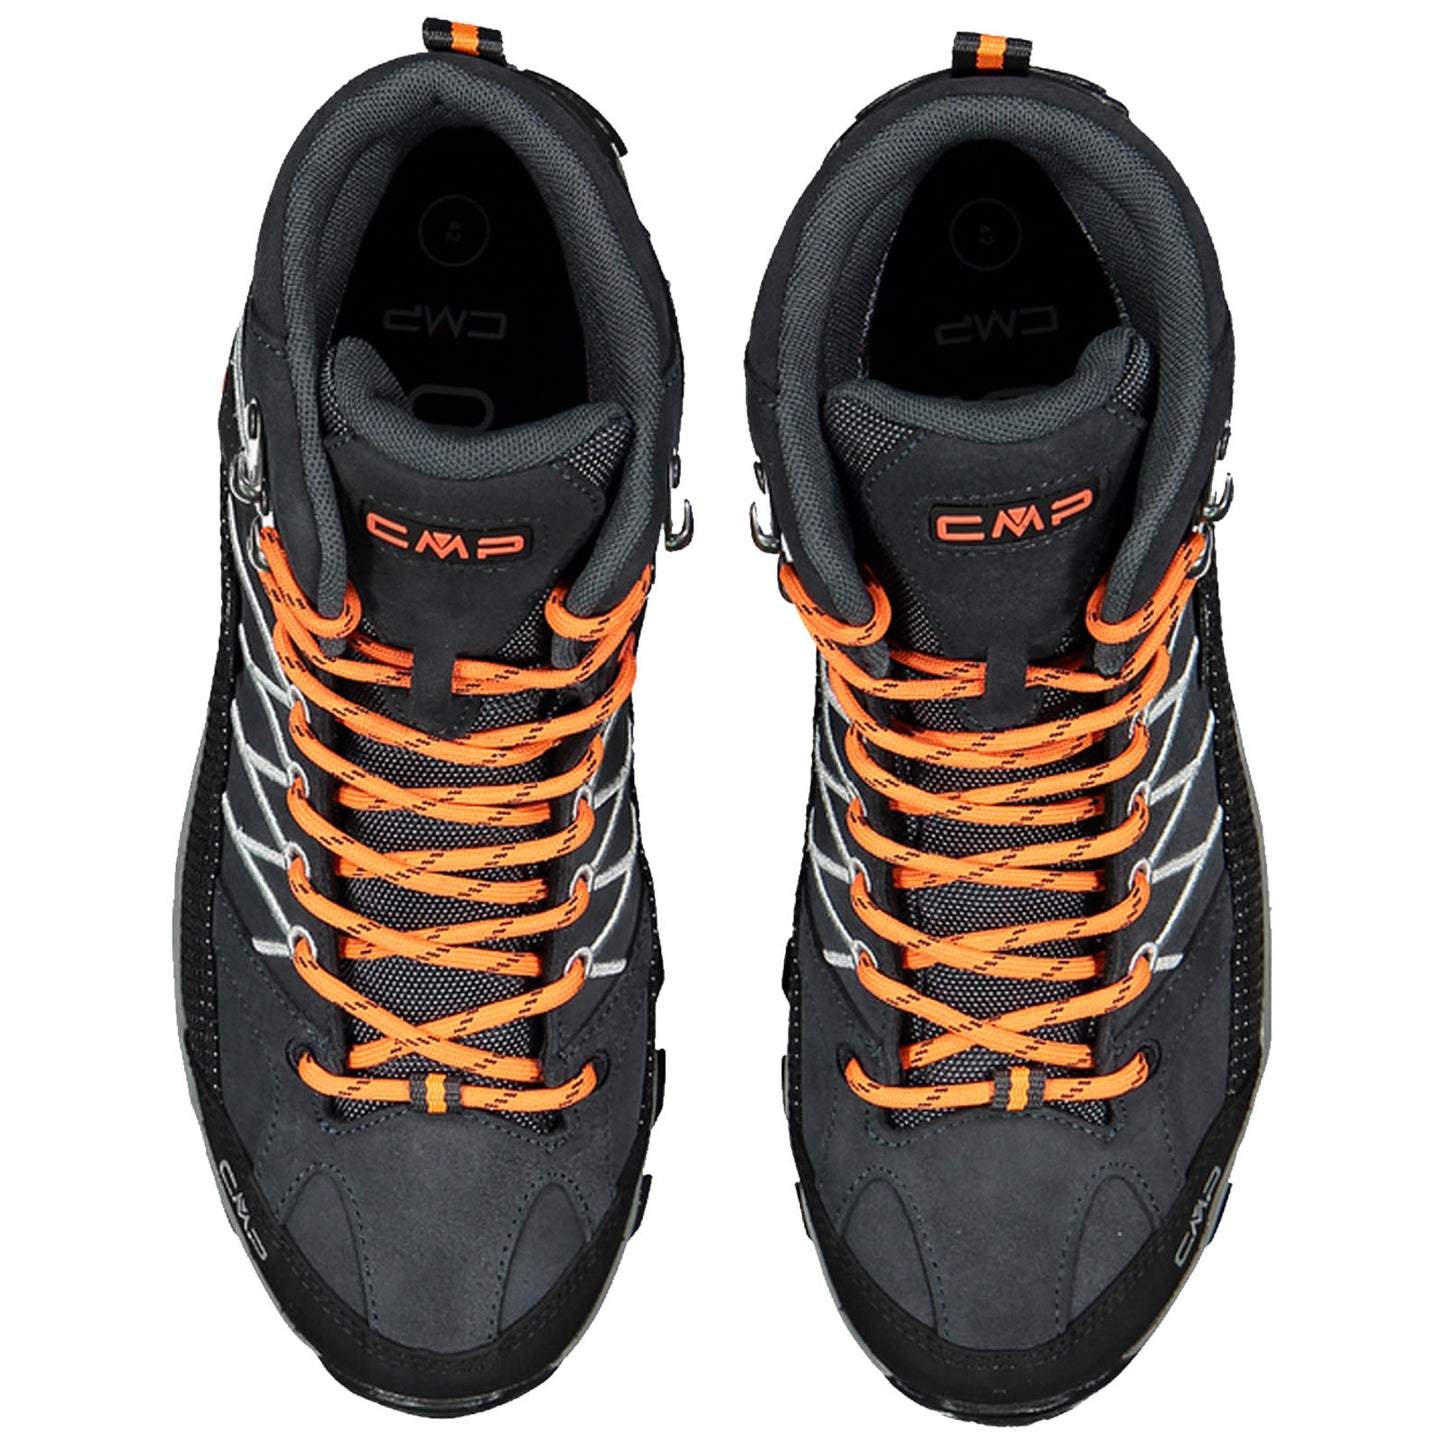 CMP Mens Rigel Walking Boots